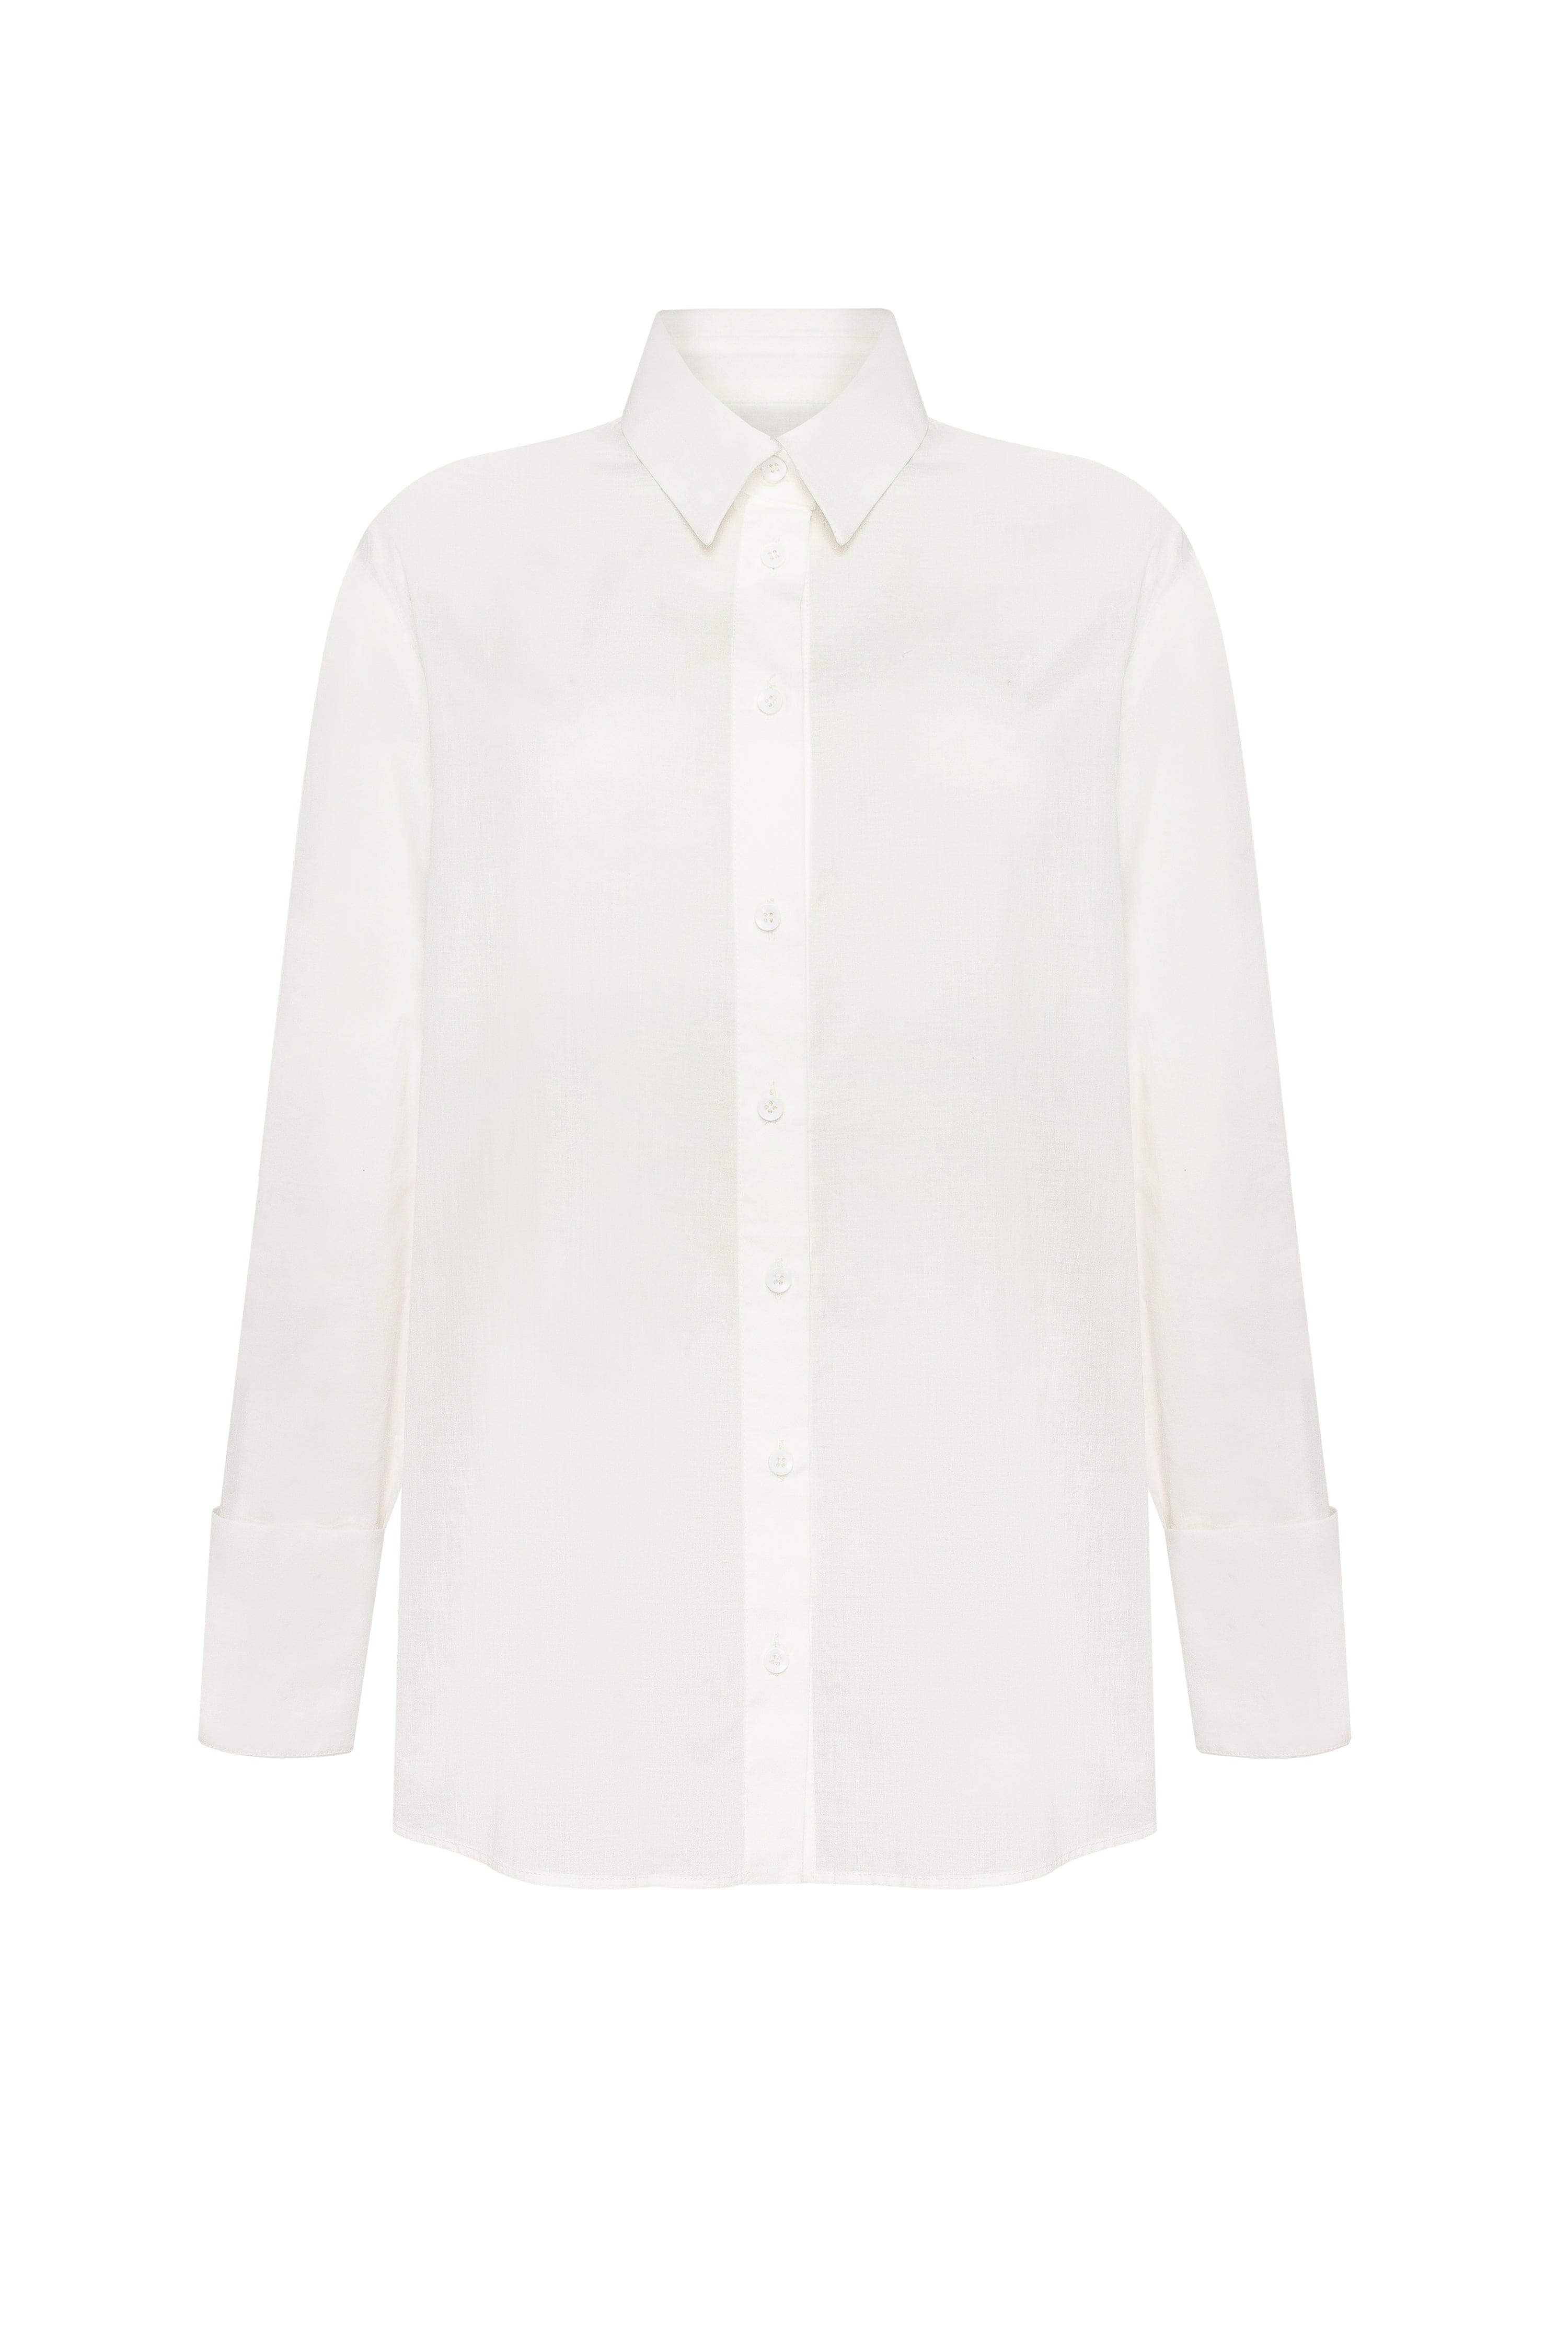 Classic white blouse, Xo Xo Milla Dresses - USA, Worldwide delivery